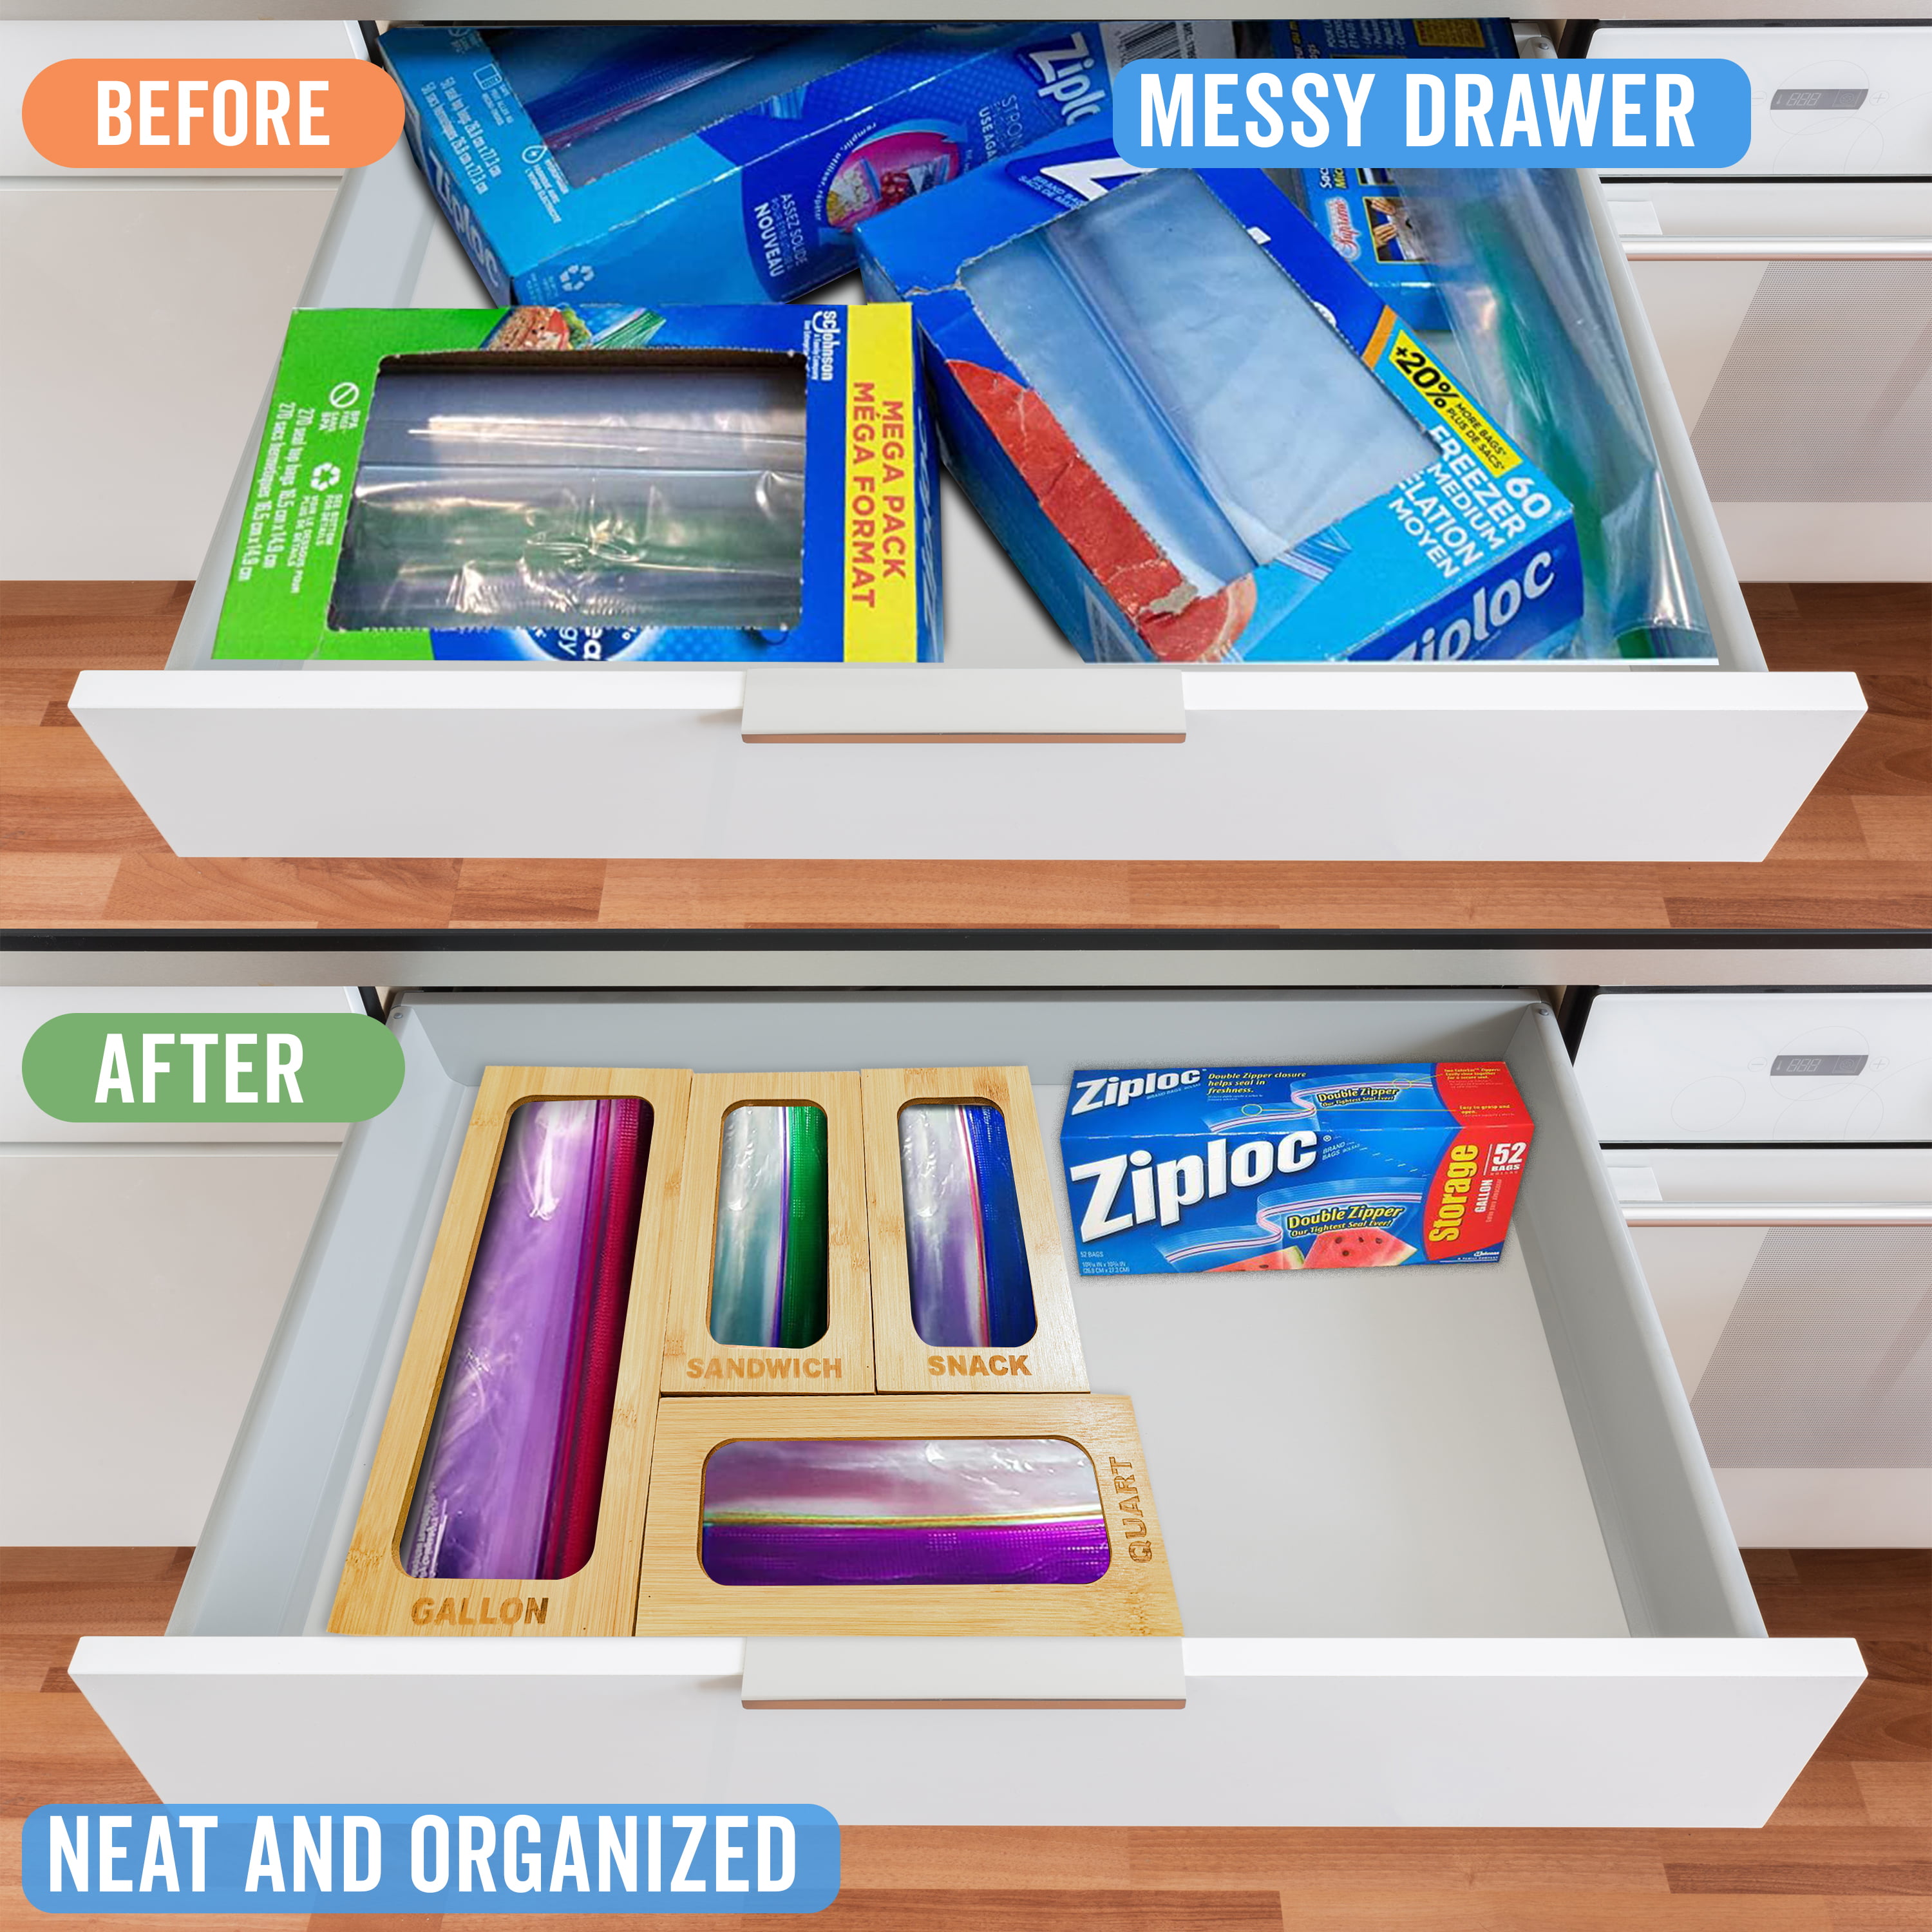 DECOMIL – Ziplock Bag Storage Organizer | Plastic Bag Organizer |Baggie Organizer Dispenser for Drawer | Food Storage Bag Organizer